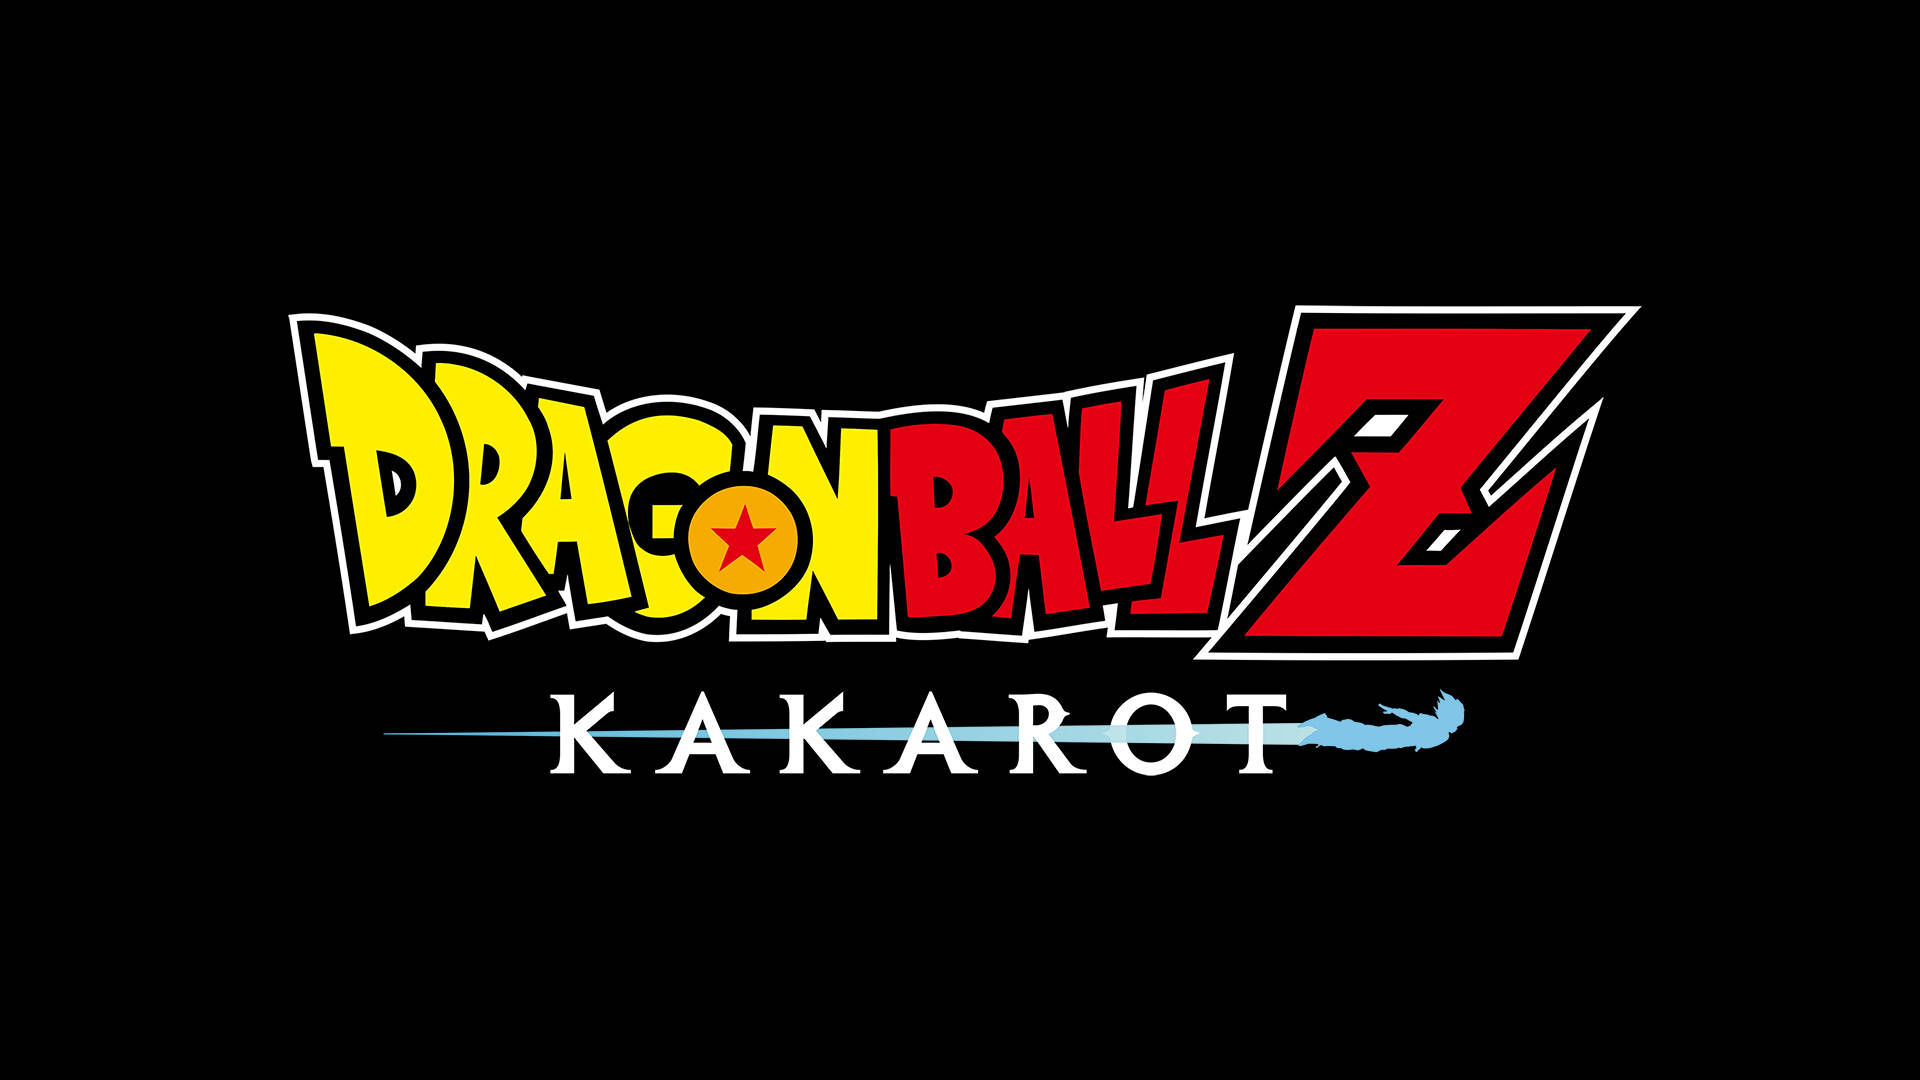 Dragon Ball Z-logo Kakarot Wallpaper